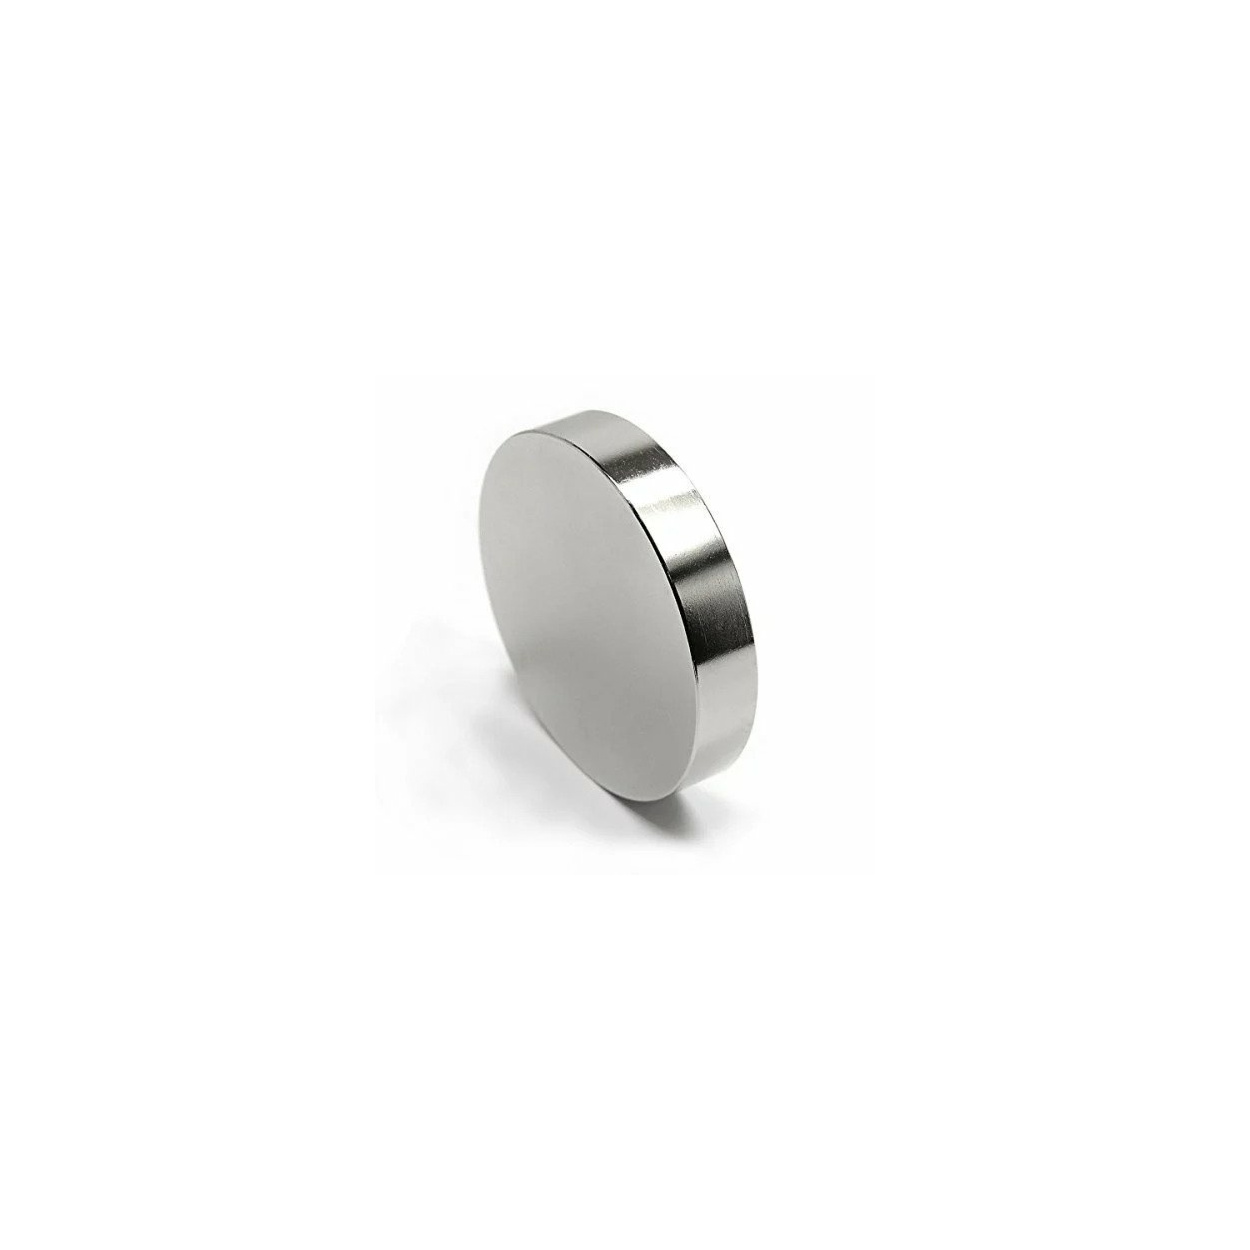 D45 x d22 x 10mm Ferrite Ring Magnet